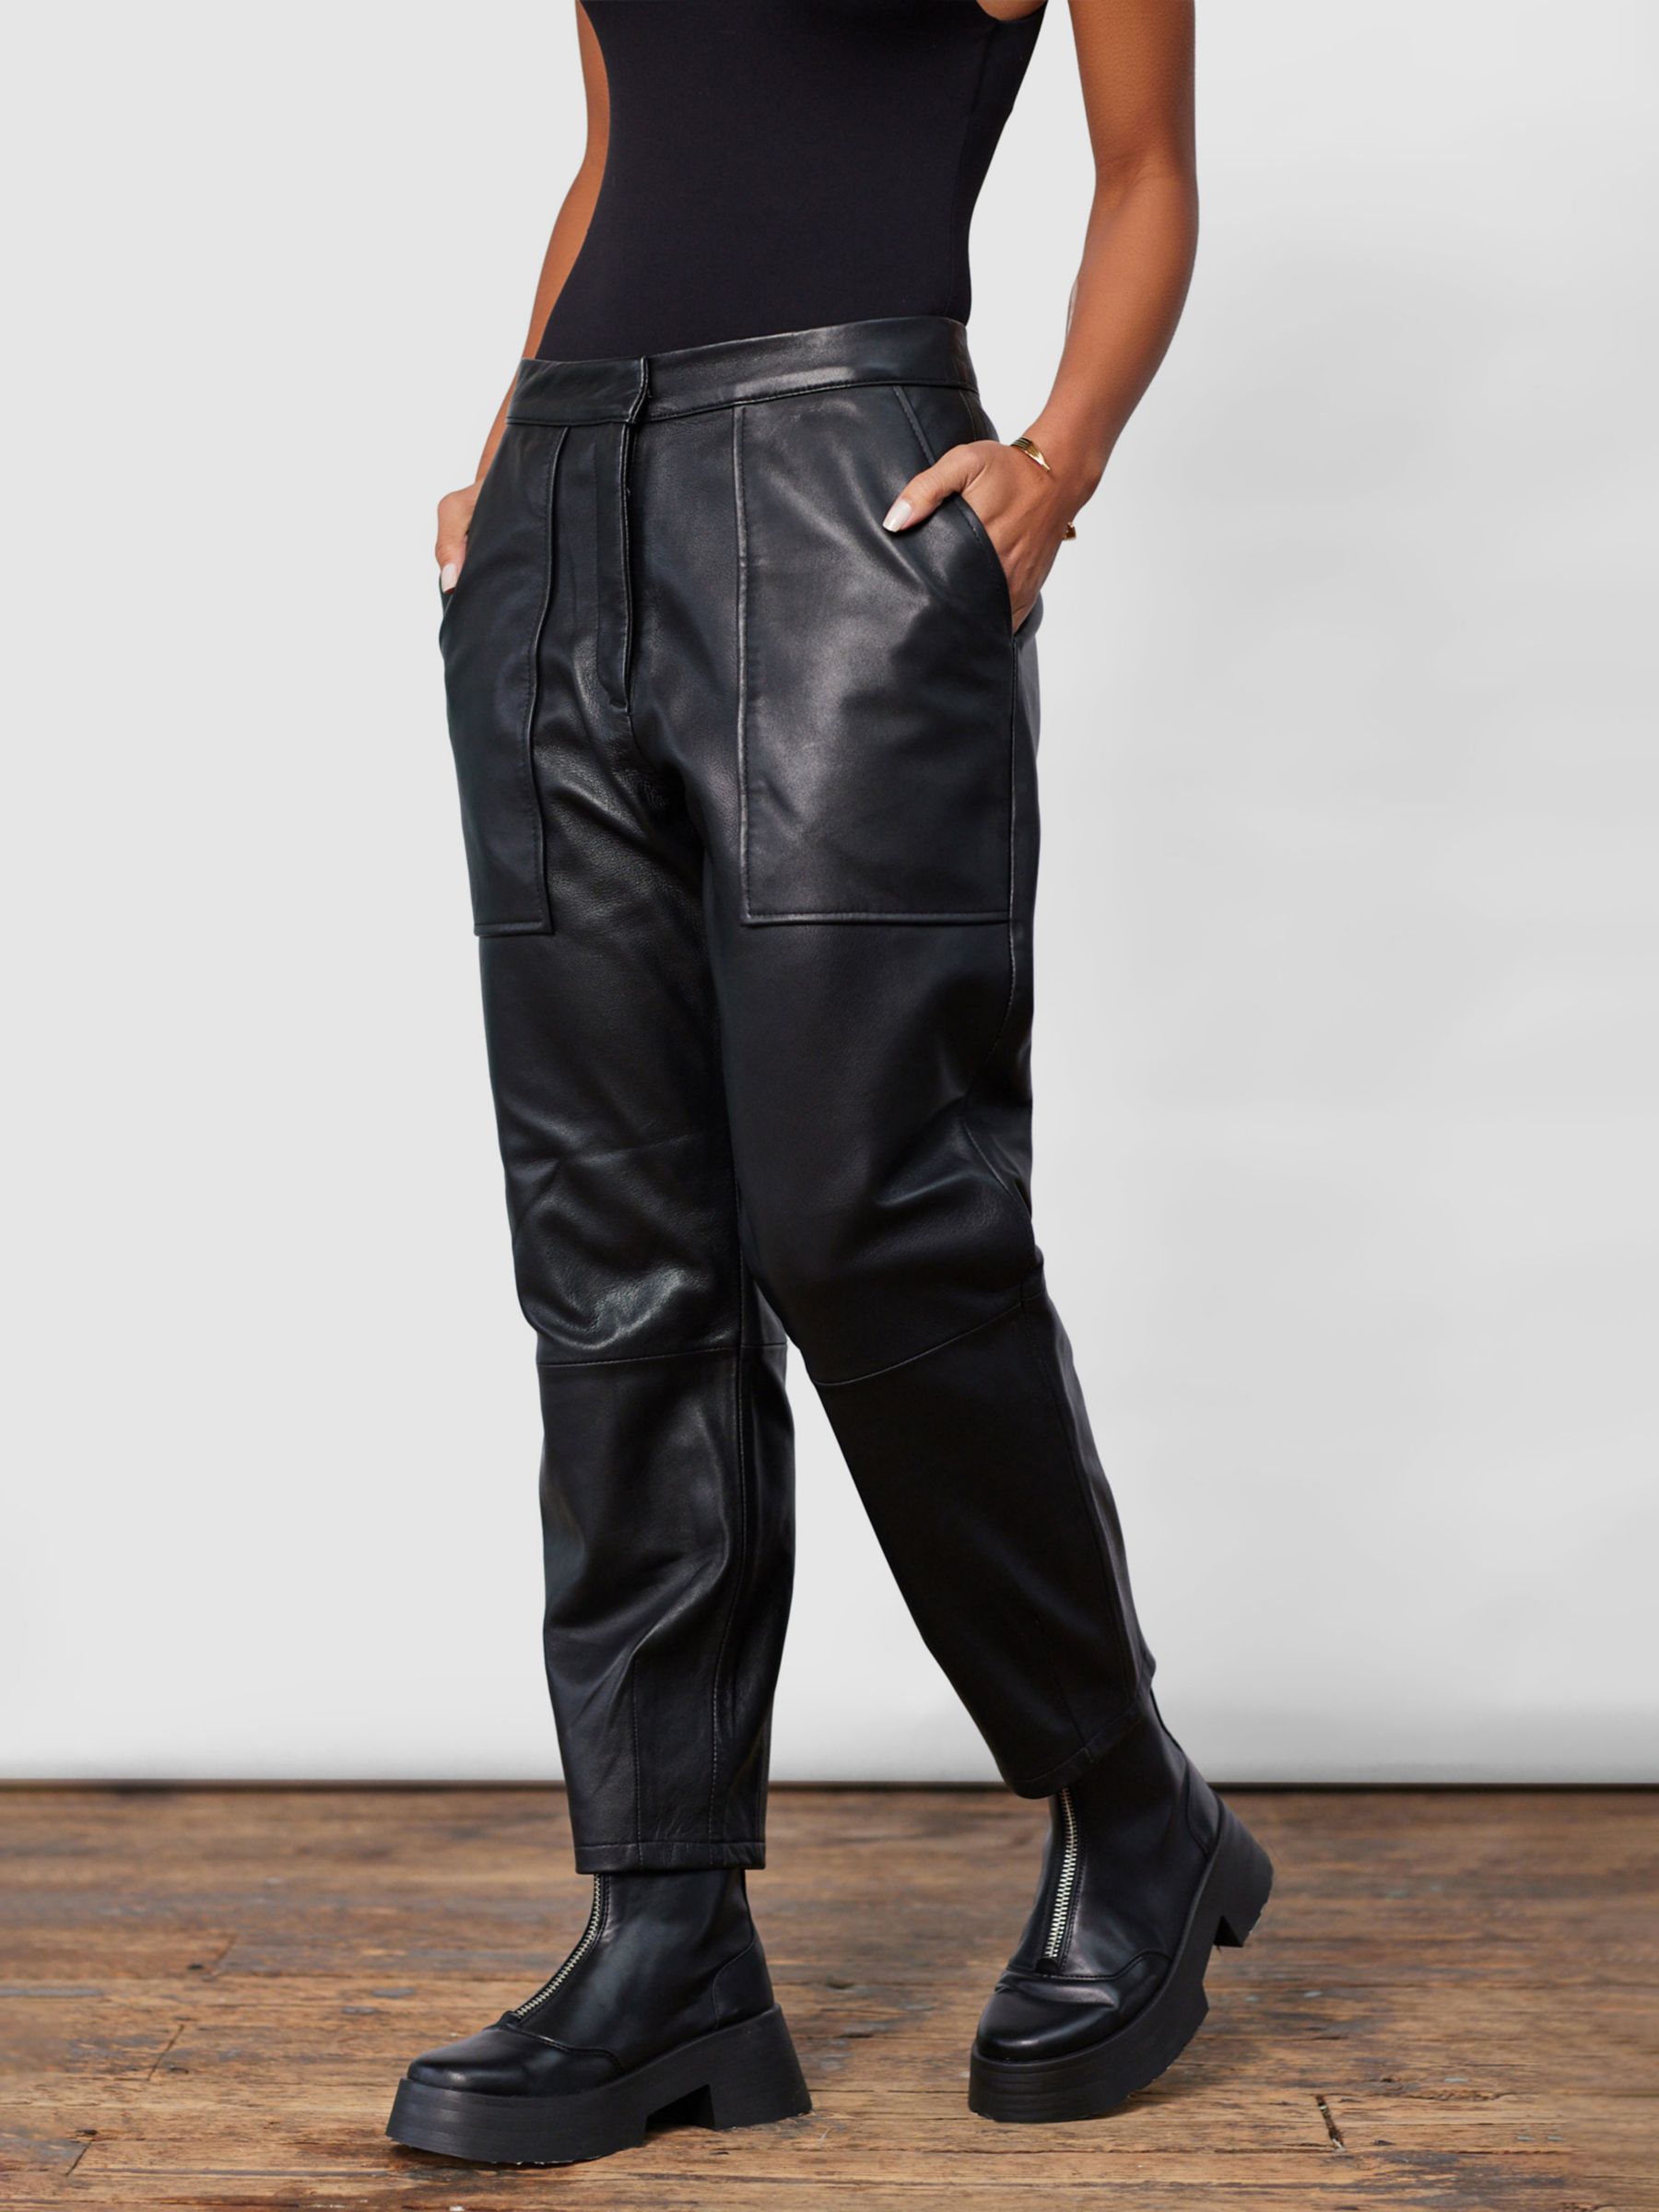 Closet London Leather Trousers, Black, 8